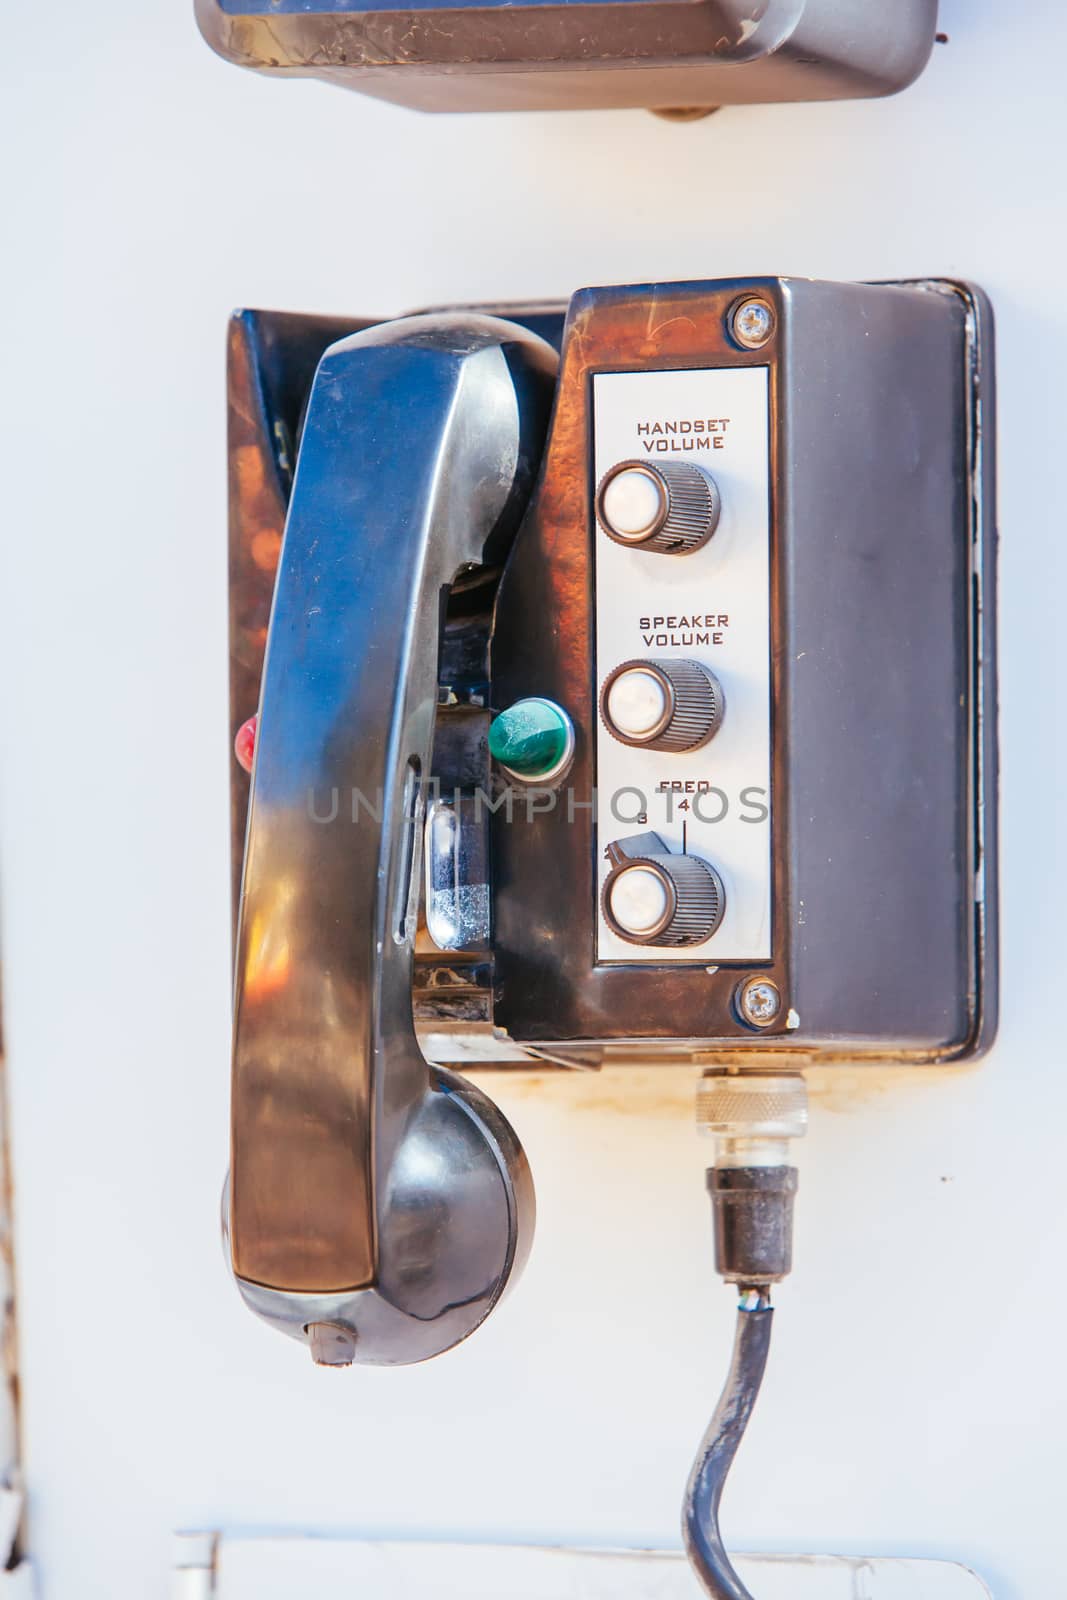 An ancient landline phone in Jerome, Arizona, USA